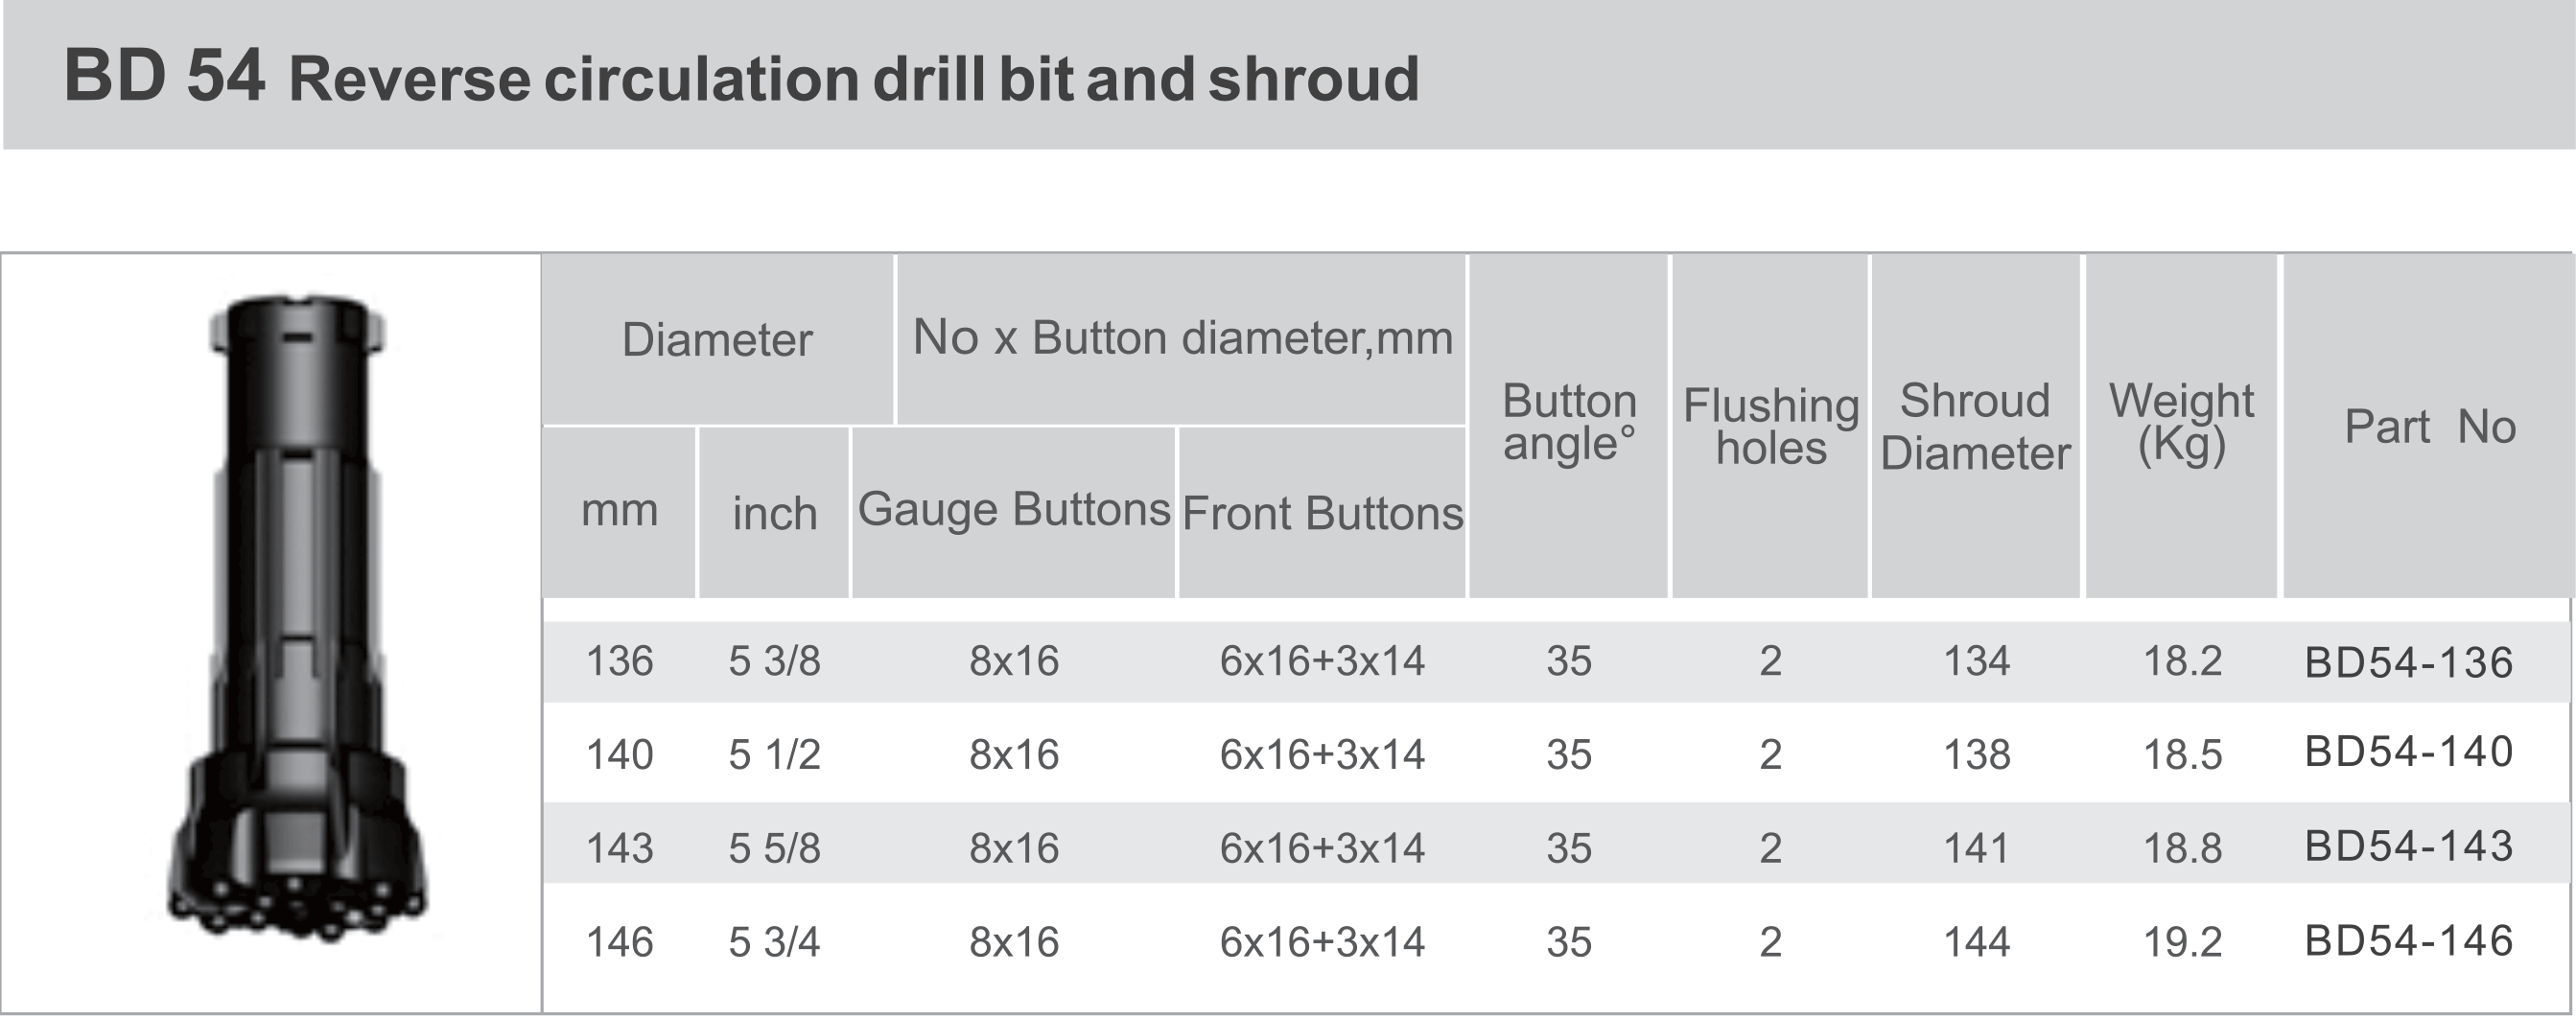 Black Diamond Drilling BD54 RC Reverse Circulation Drill Bit and Shroud technical data